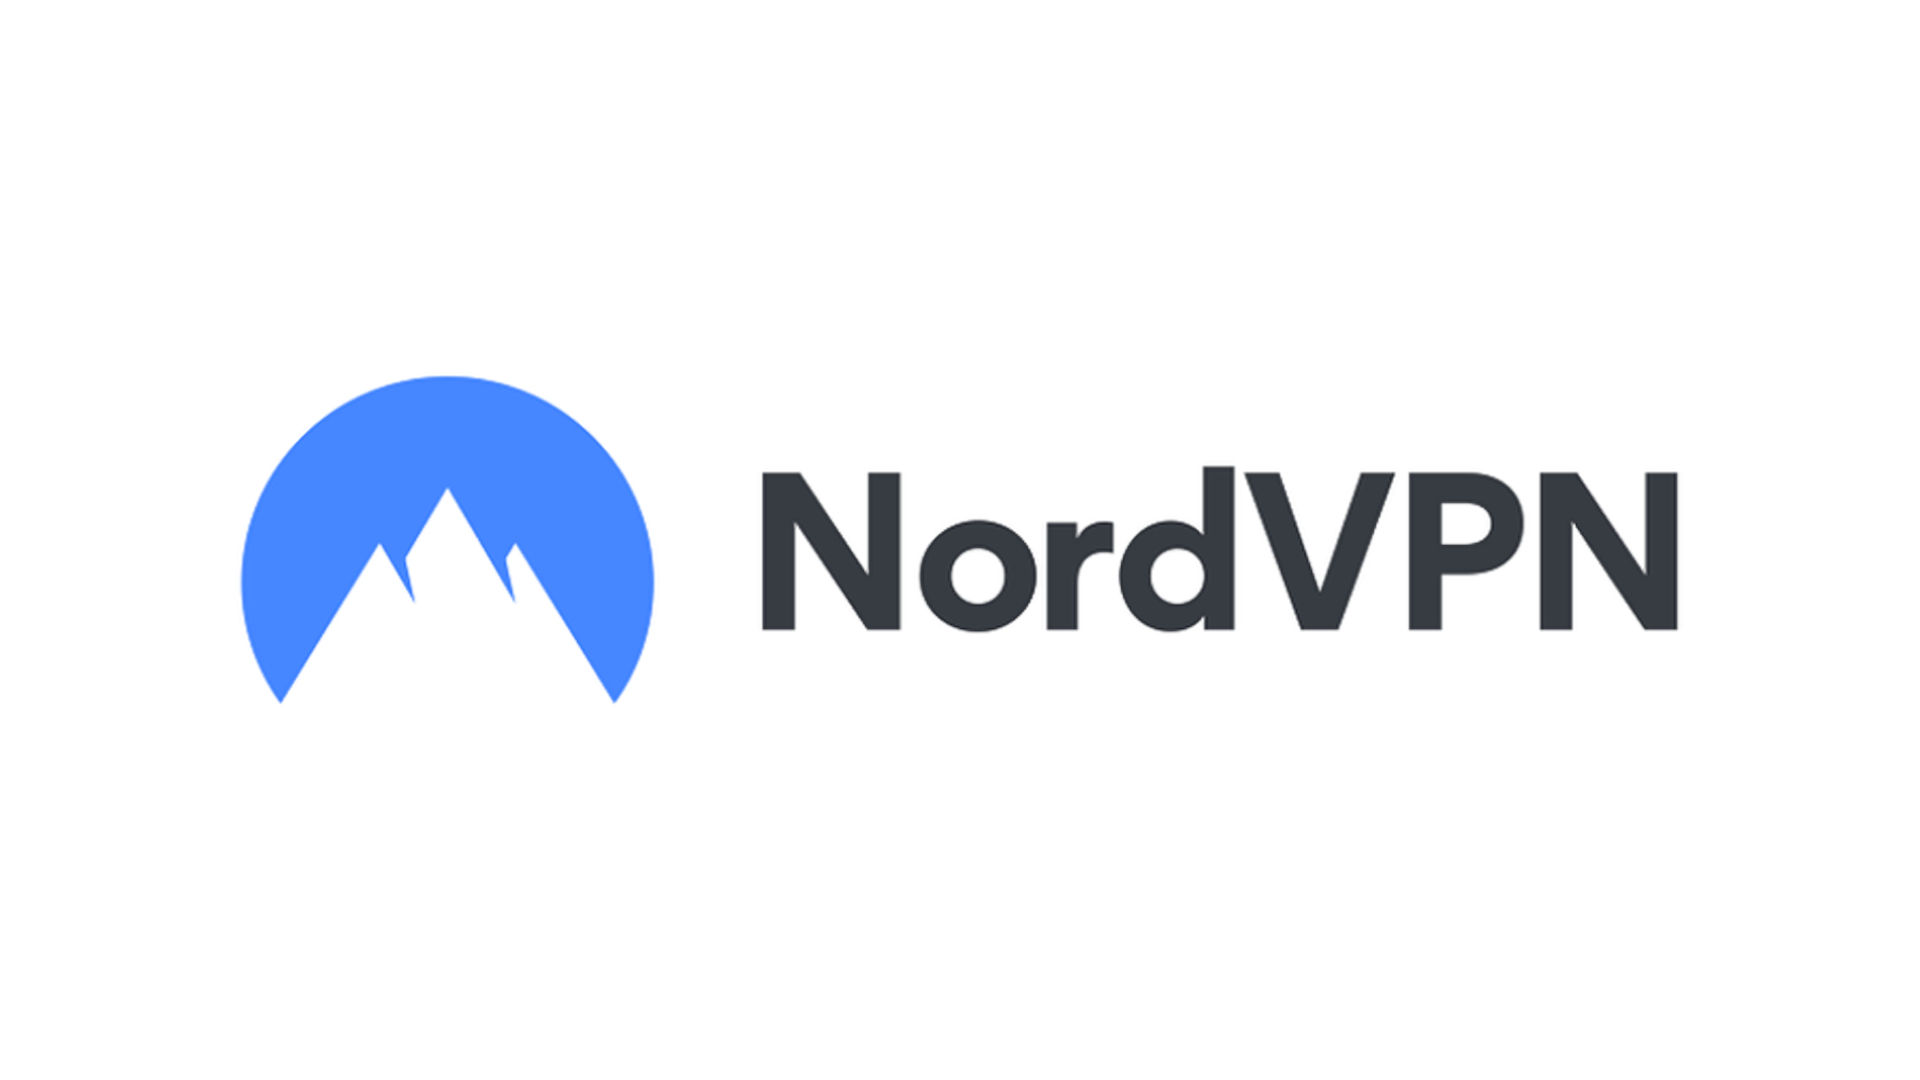 Best VPN apps - NordVPN. Its logo is on a white background.